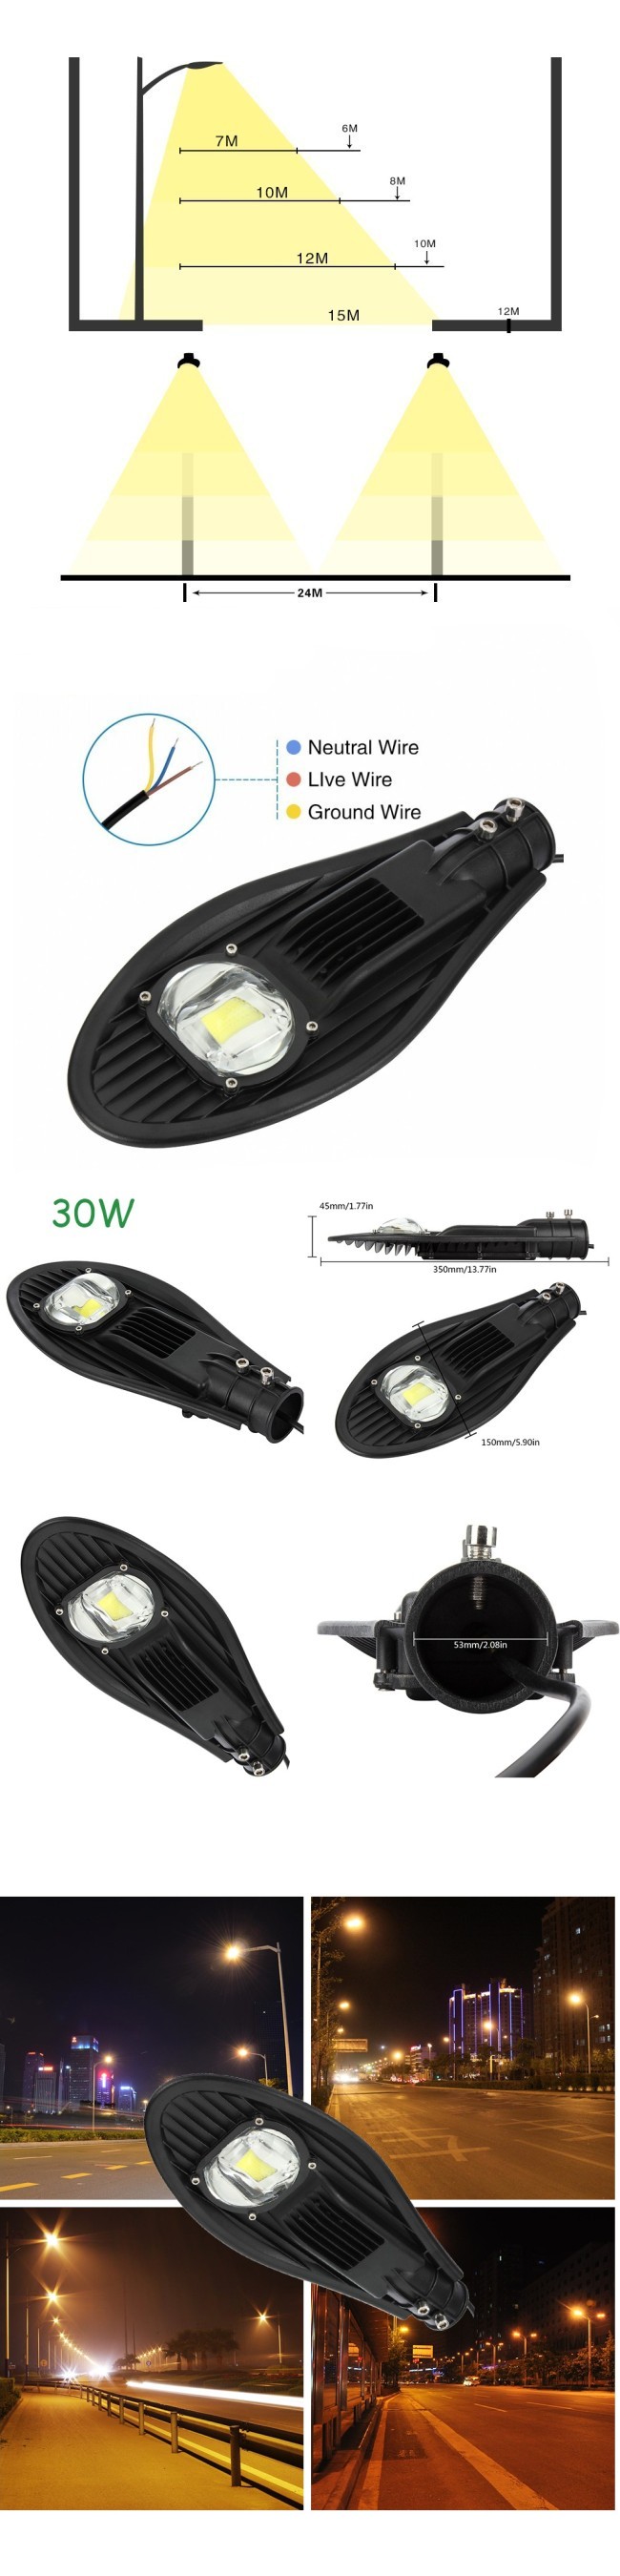 Wholesale High Power 150W LED Street Light COB Bridgelux Chip Outdoor